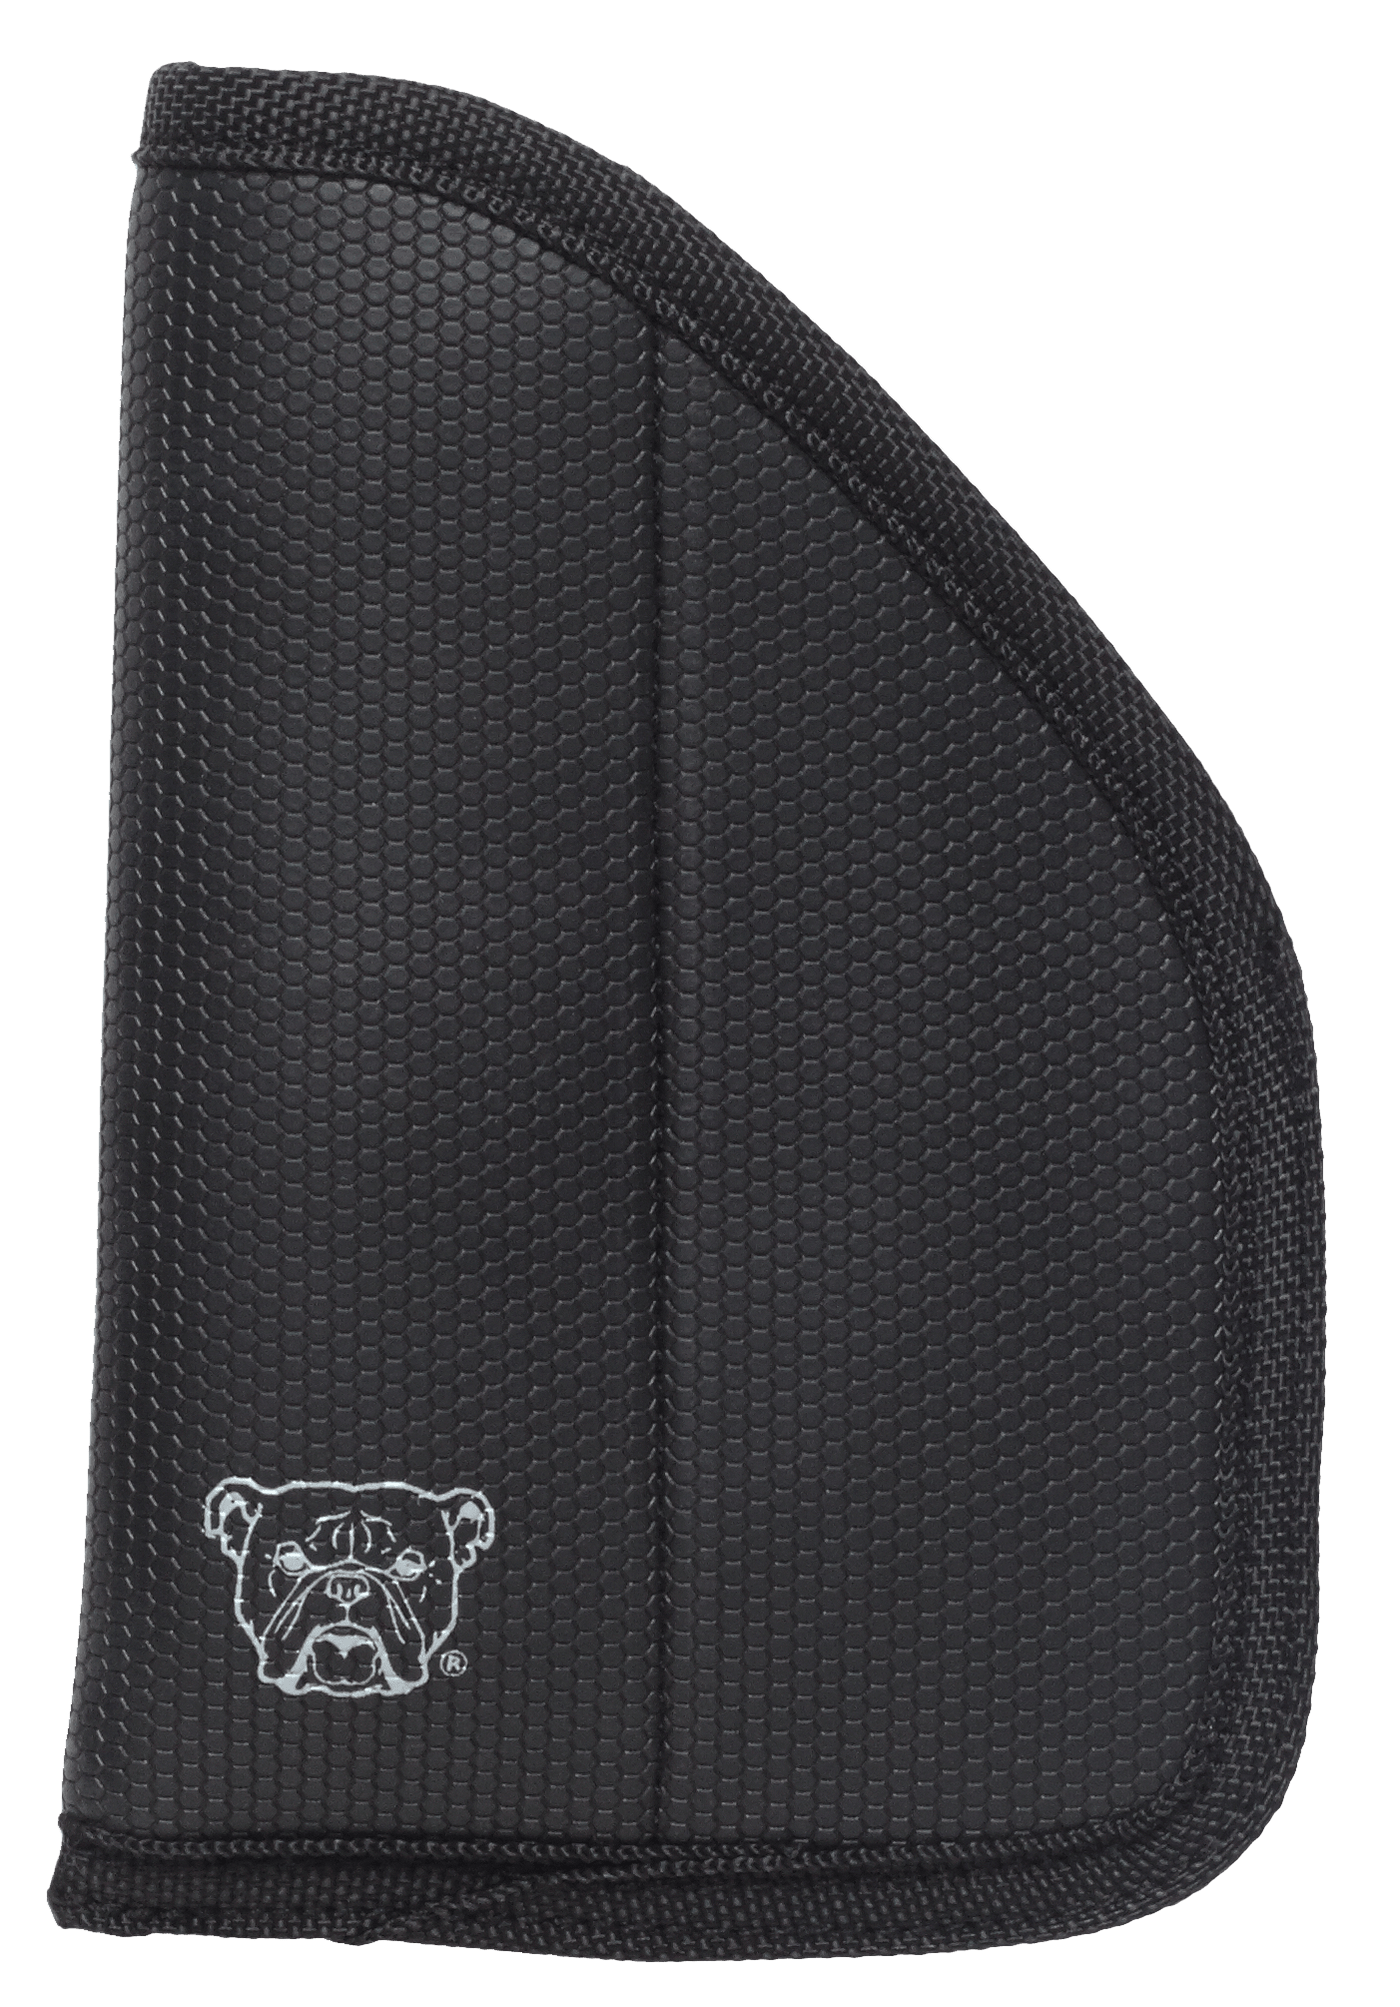 Bulldog Bulldog Super Grip Inside Pant - Holster Medium Black Holsters And Related Items